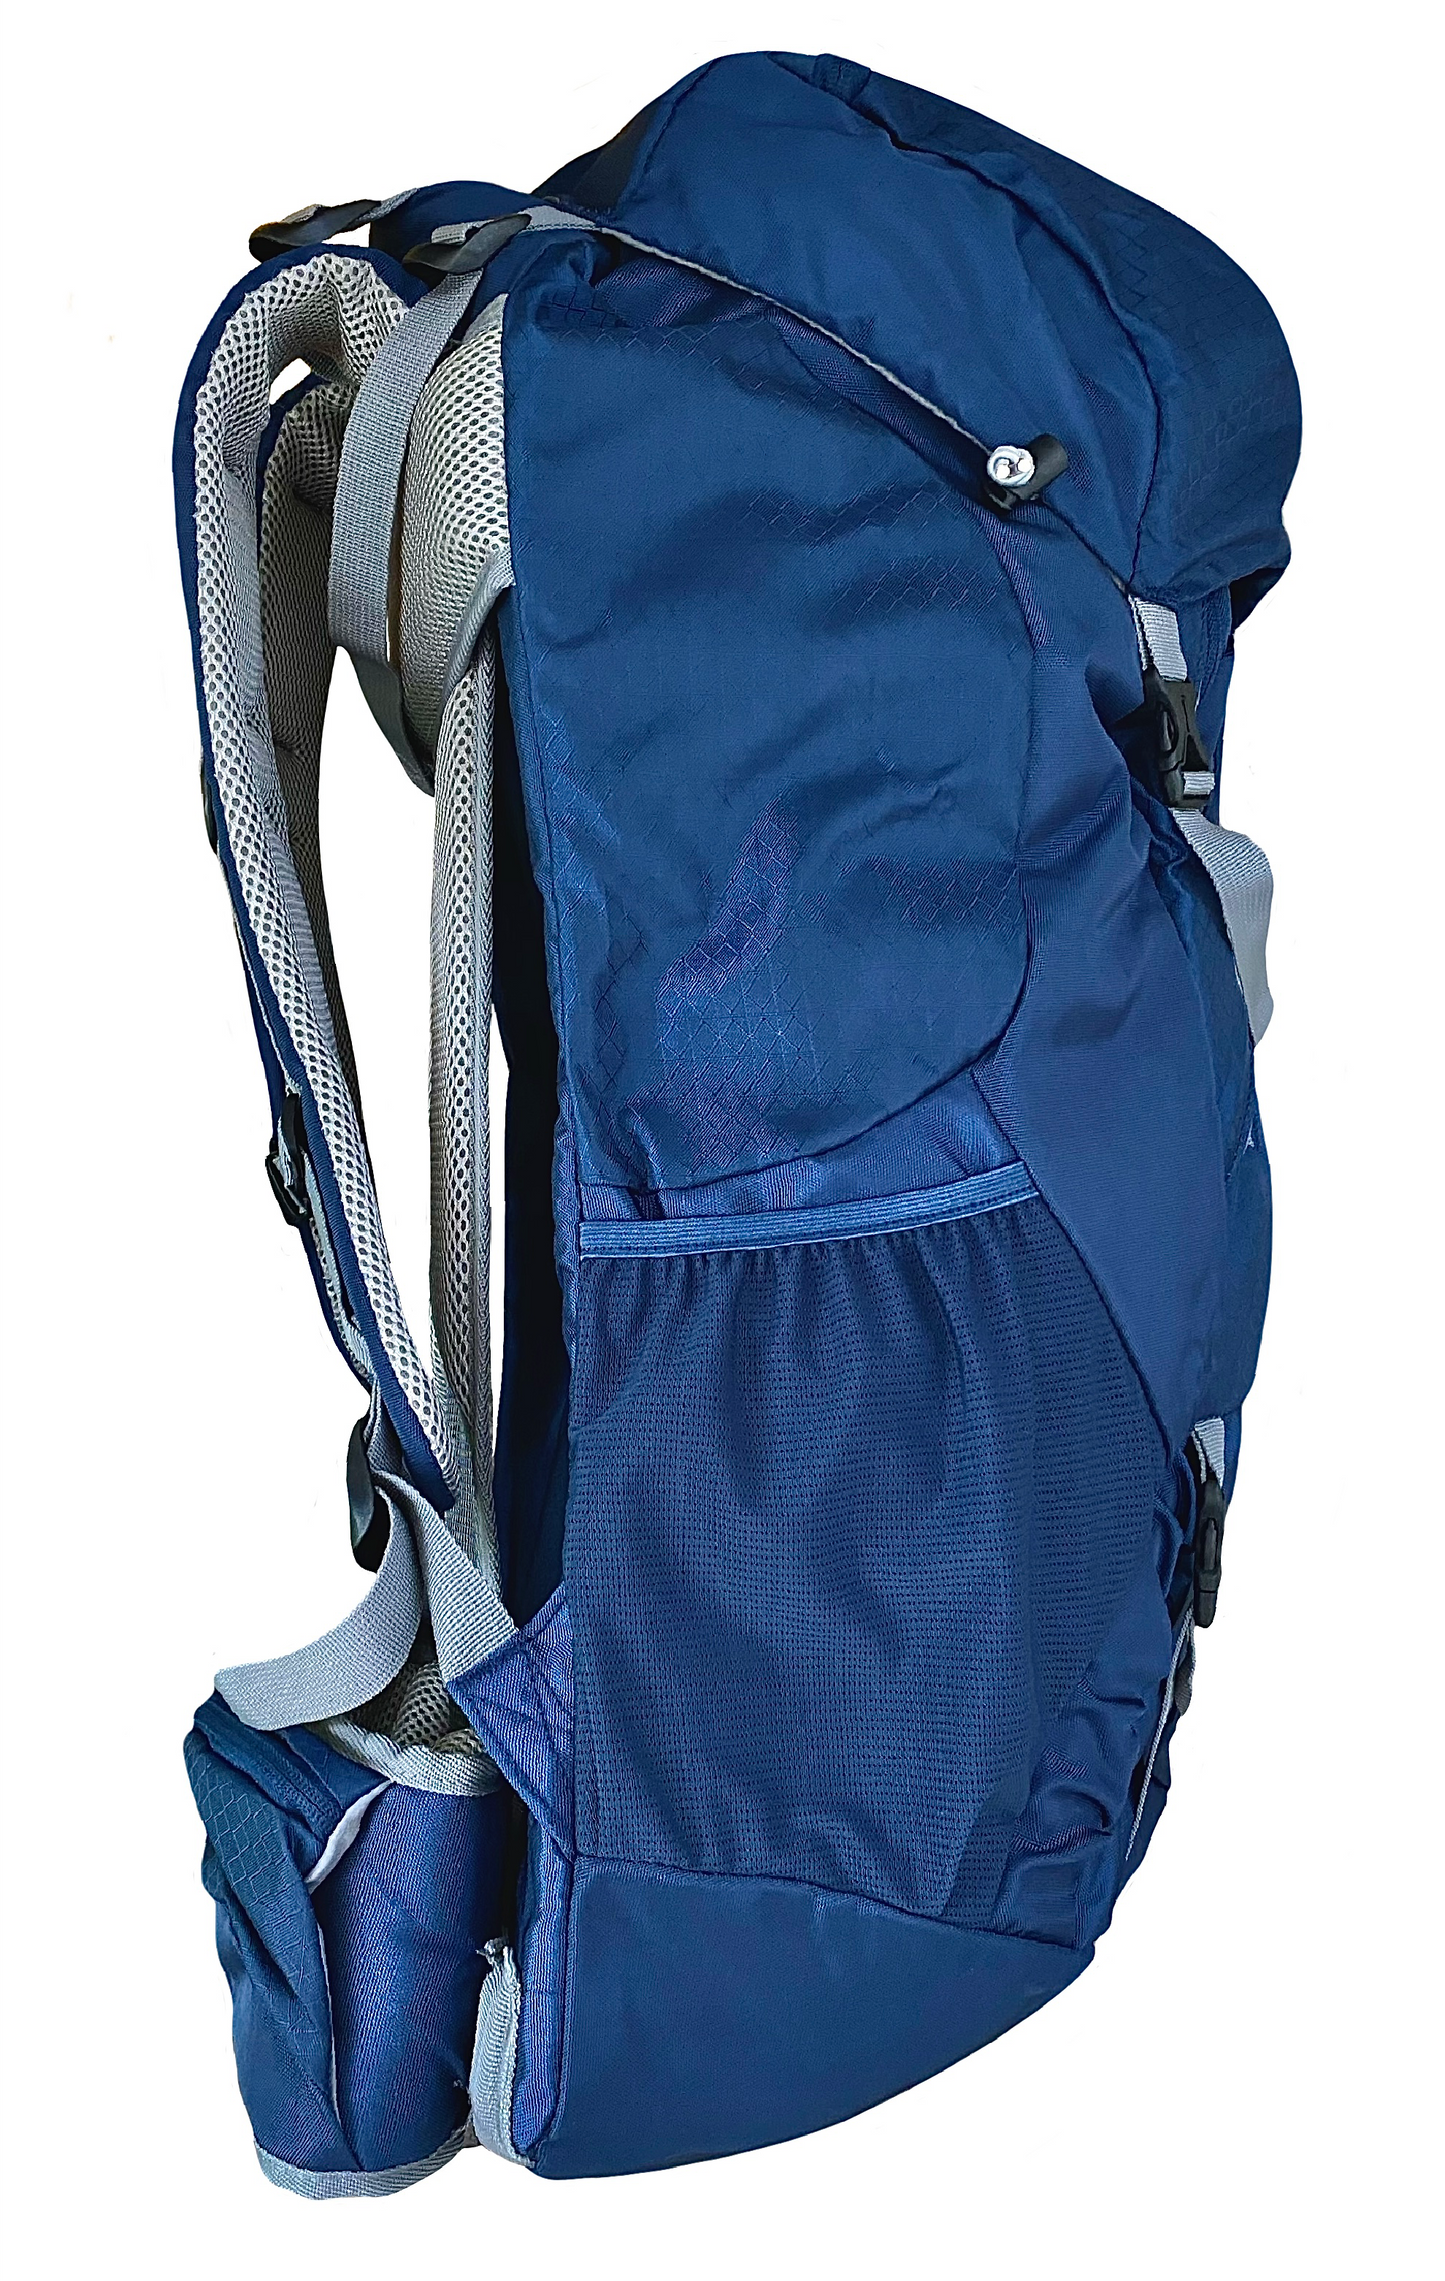 Kinetic 60 Liter Hiking Backpack (Blue)